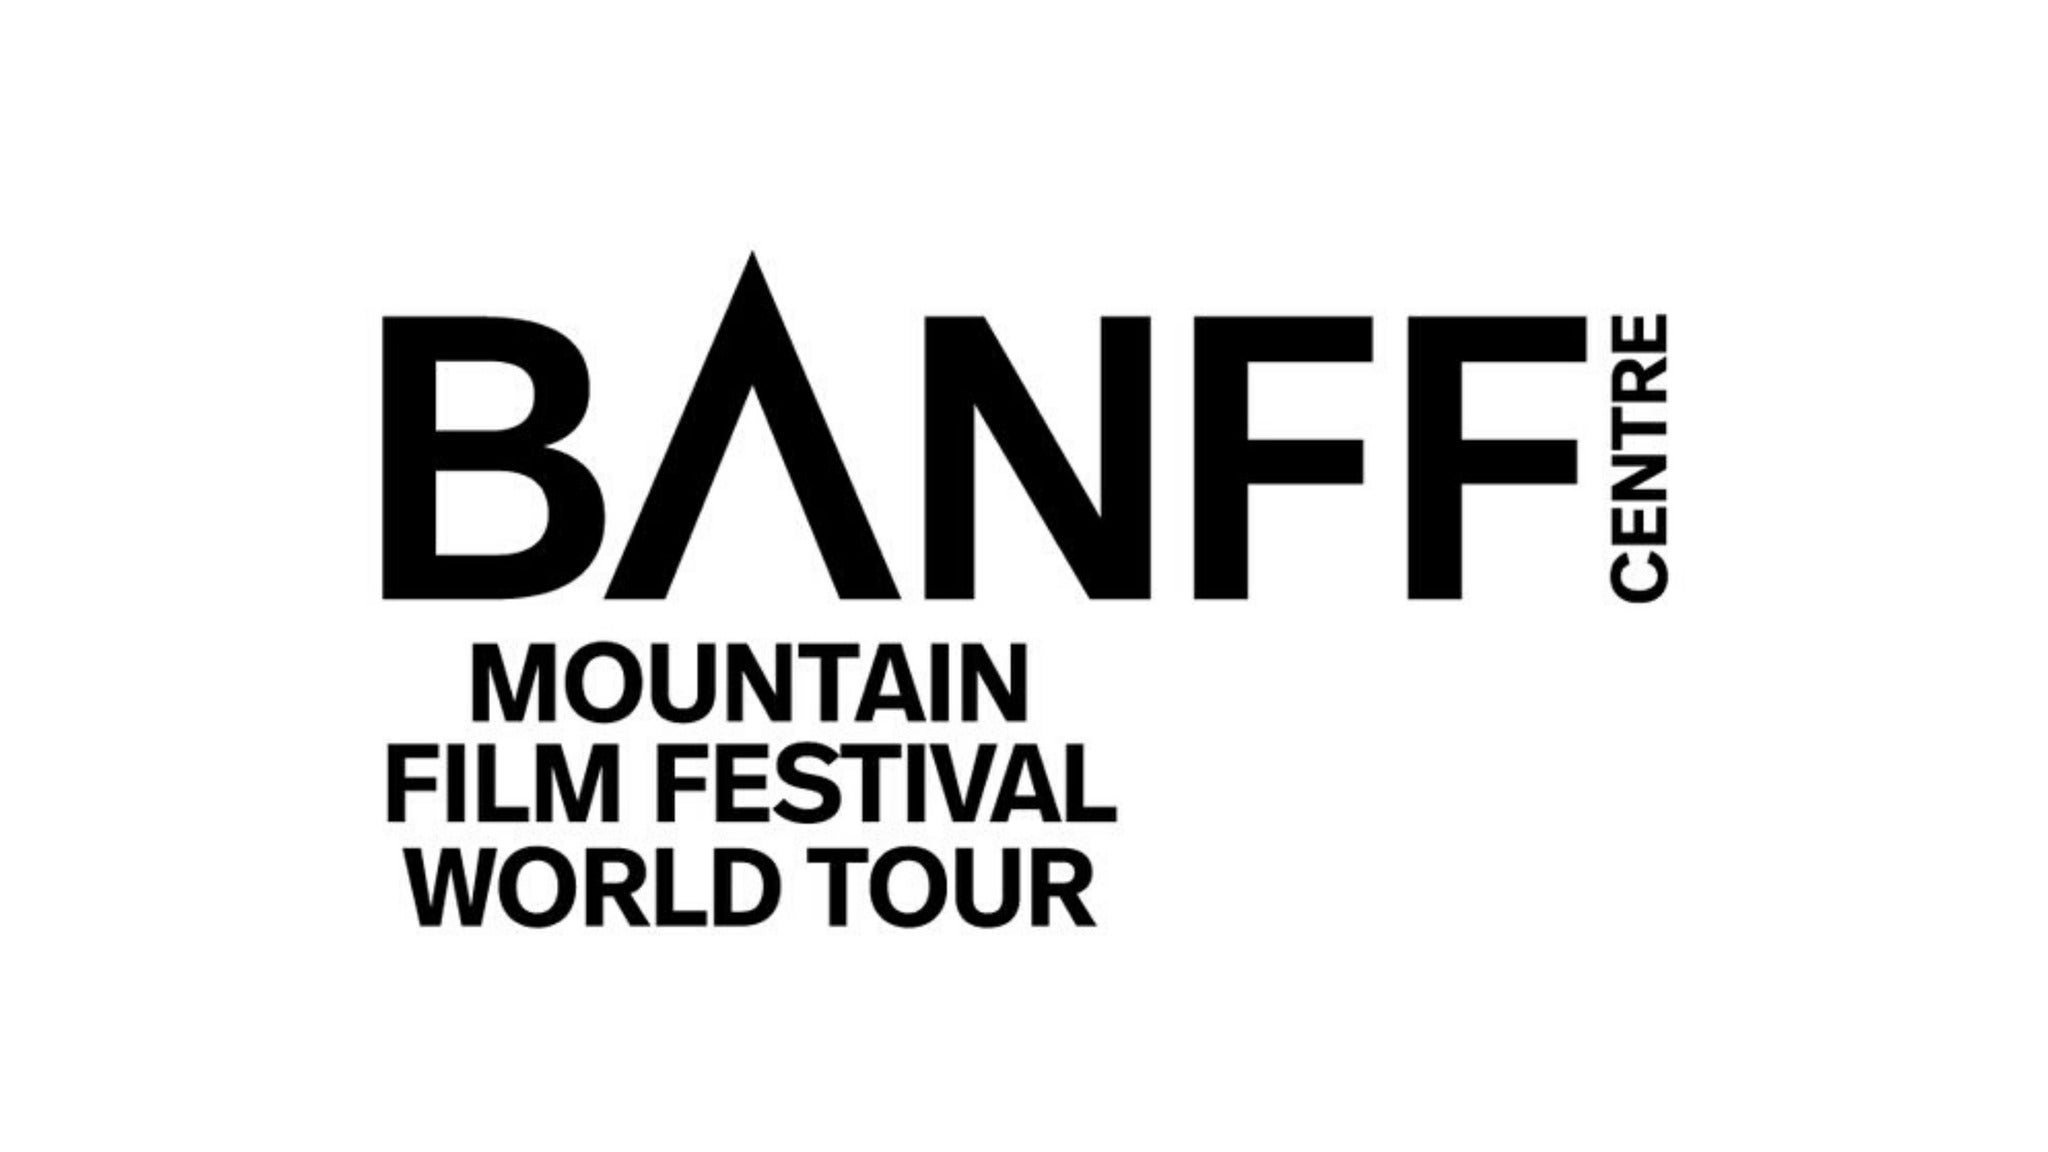 Banff Center Mountain Film Festival World Tour